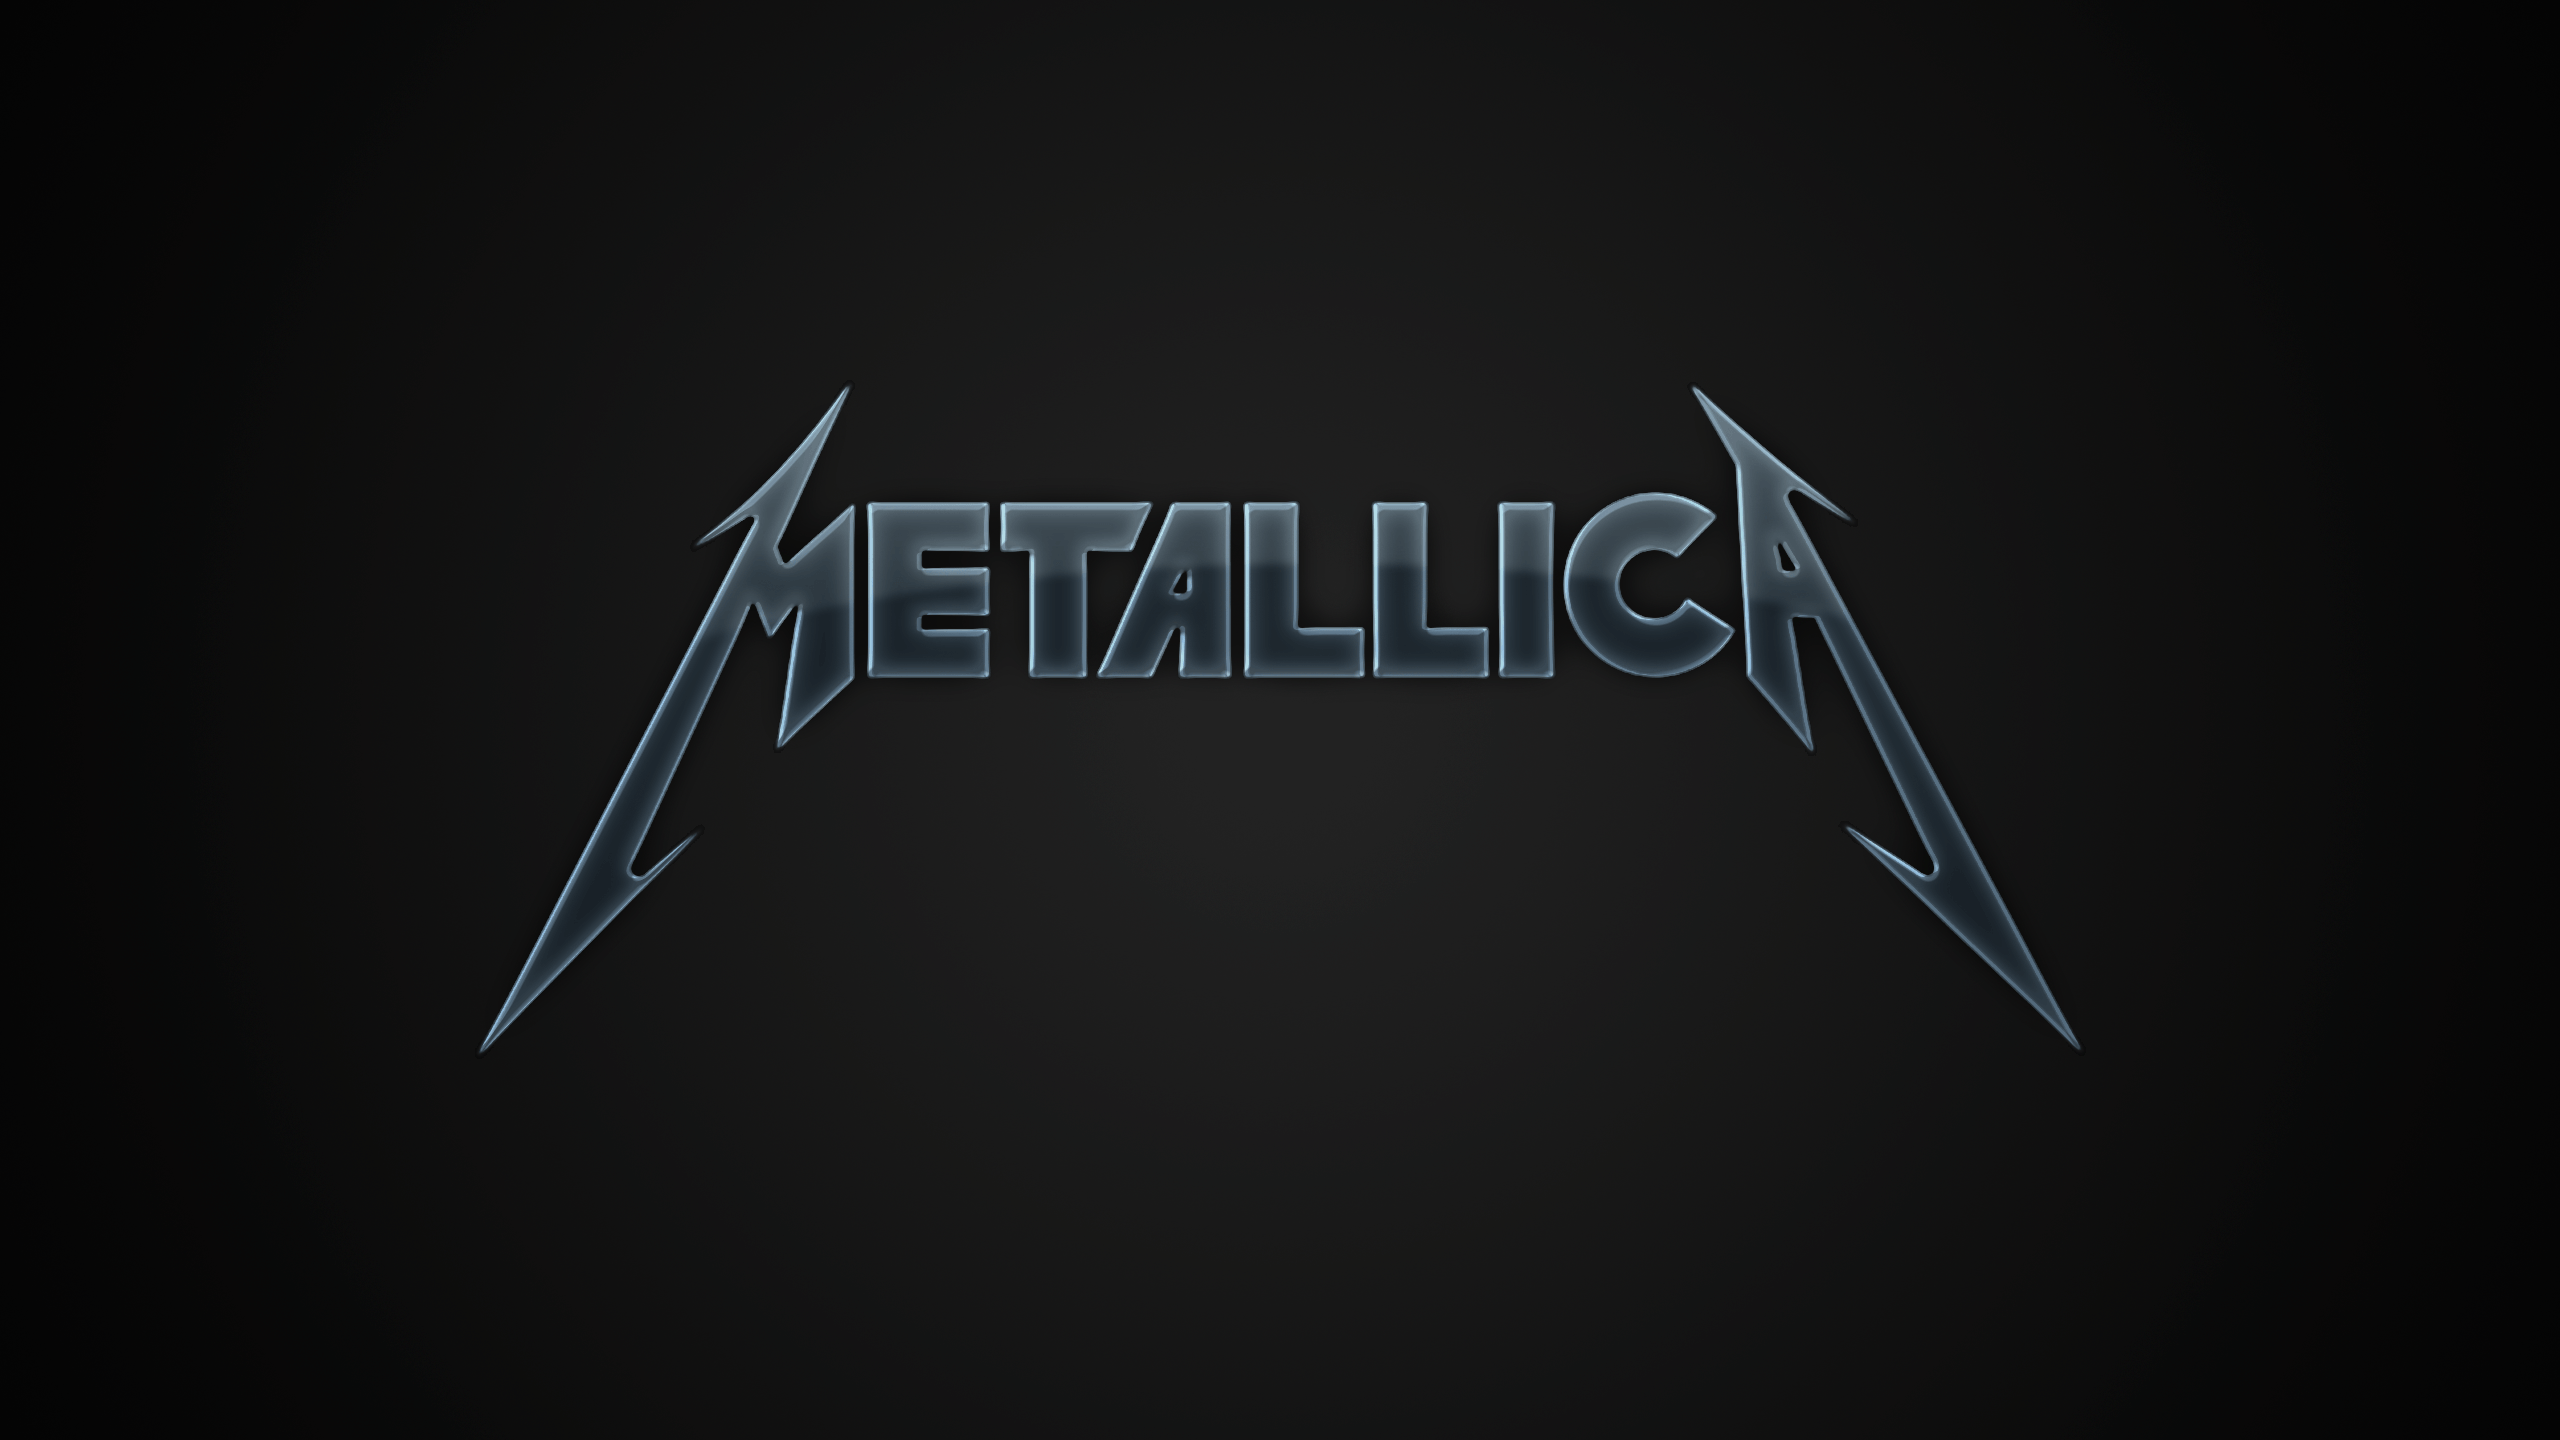 Metallica Original Logo - Metallica HD Background Wallpaper 17449 - Baltana